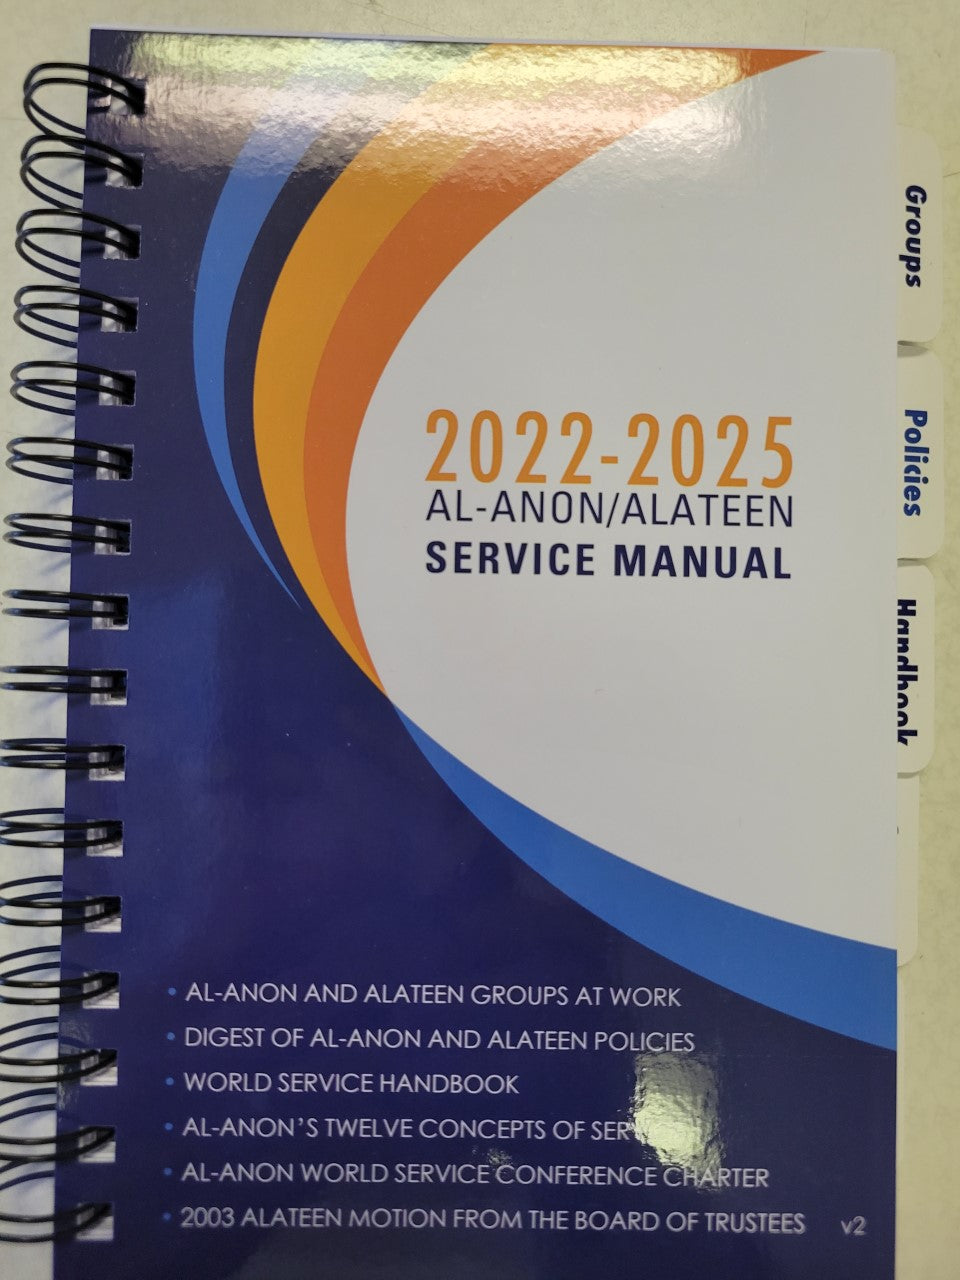 Manual Al-Anon/Alateen Service 2022-2025